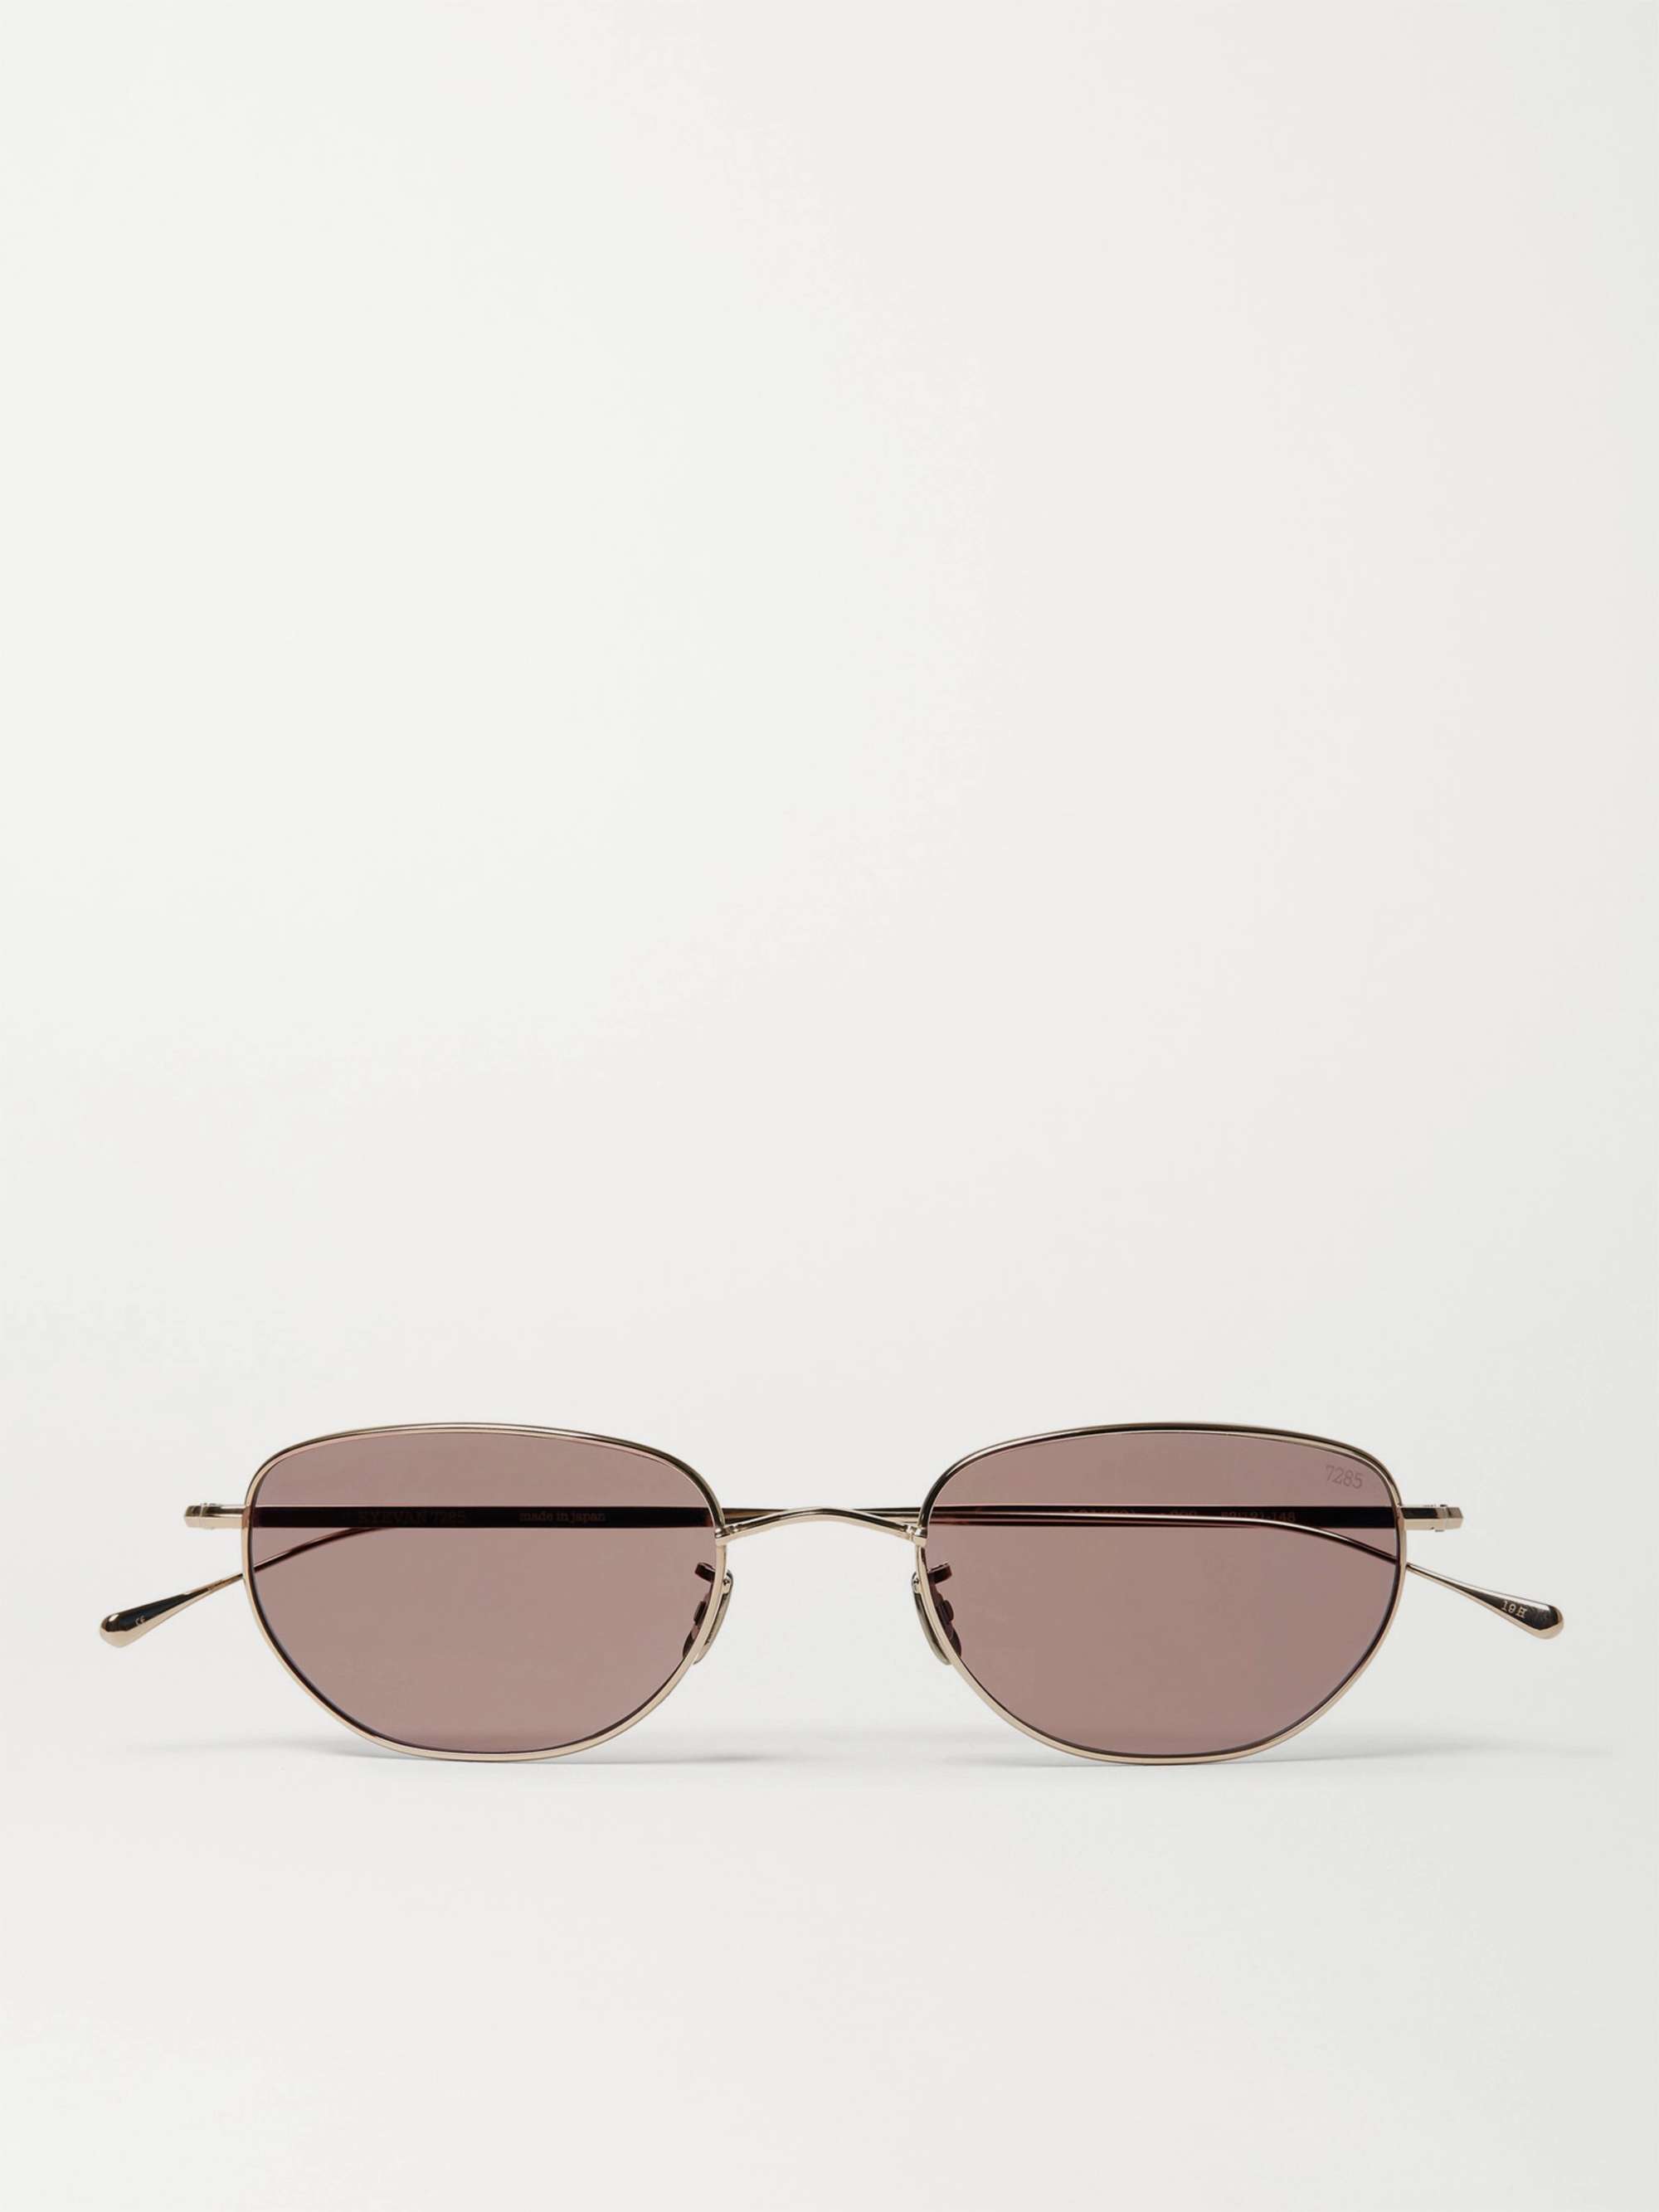 EYEVAN 7285 Oval-Frame Gold-Tone Titanium Sunglasses